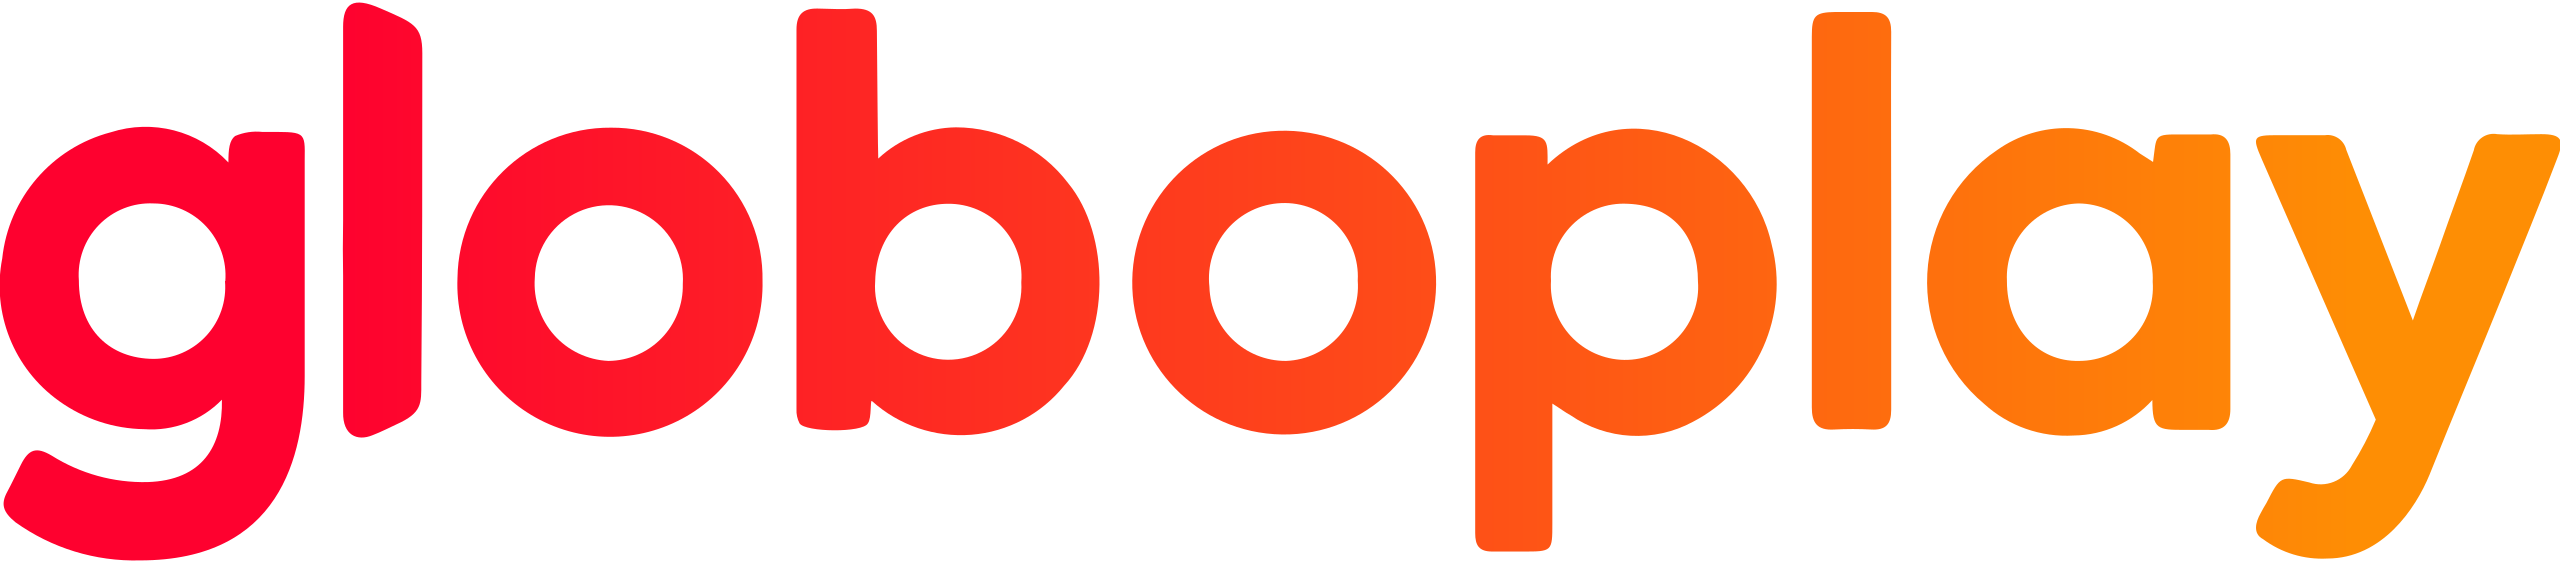 Globoplay Logo 2020.svg